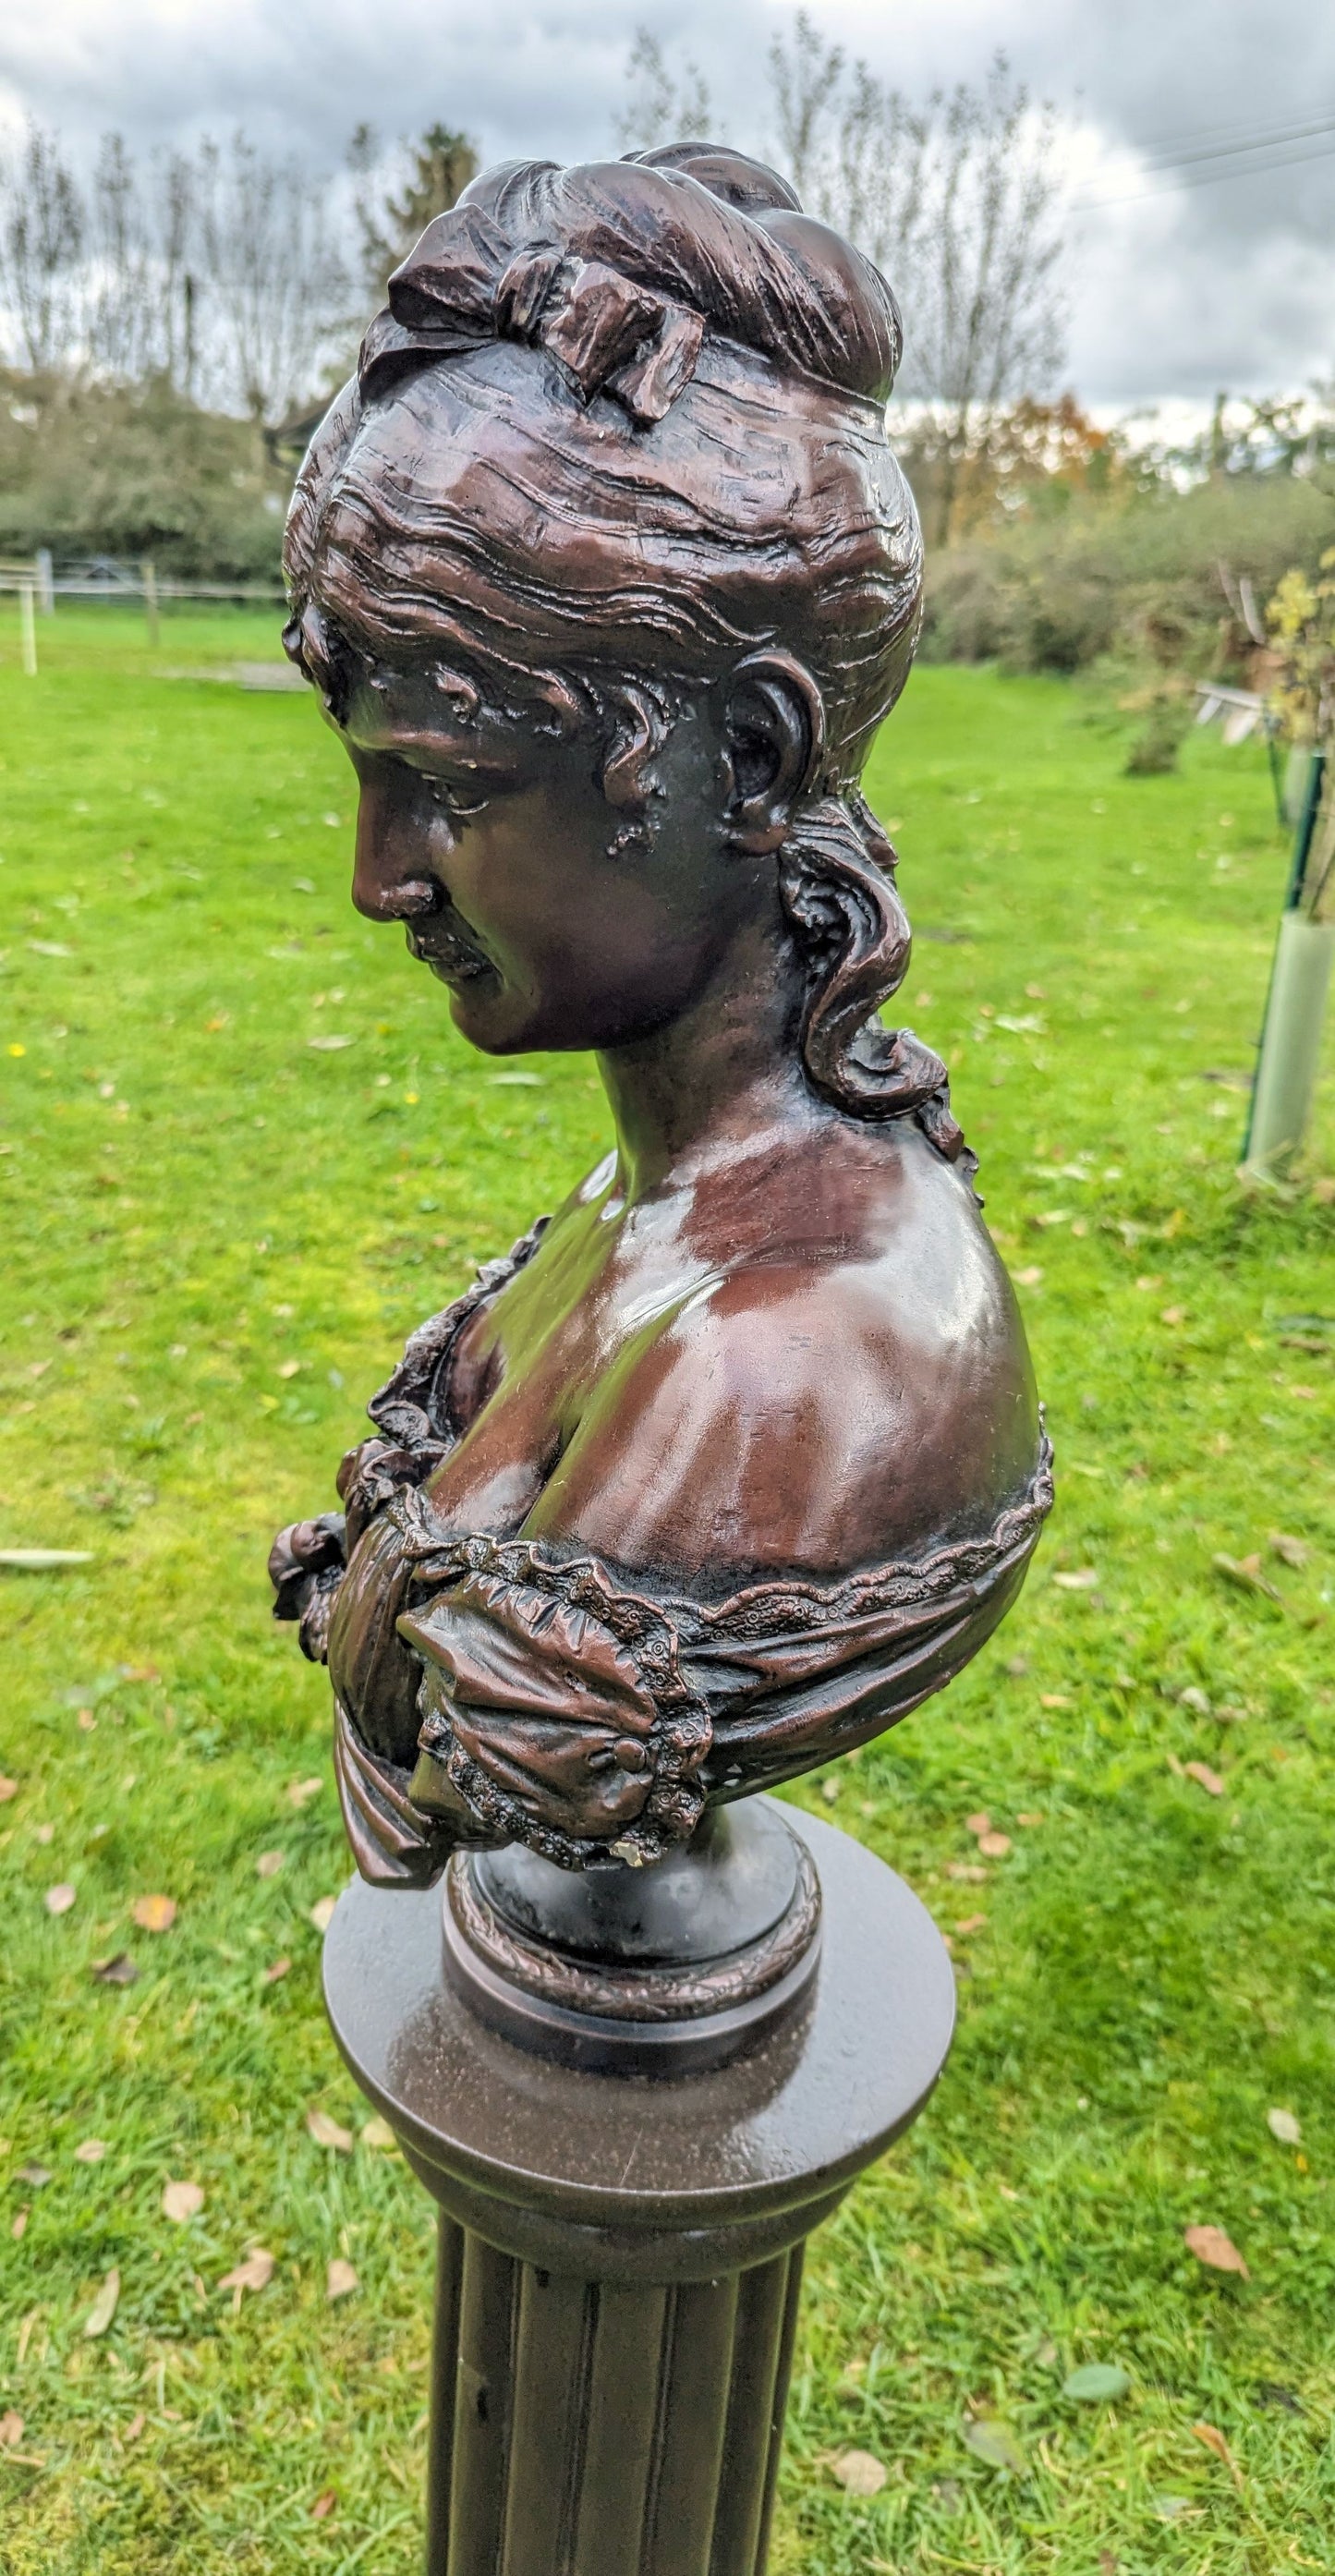 Late 19th century bronzed bust & column